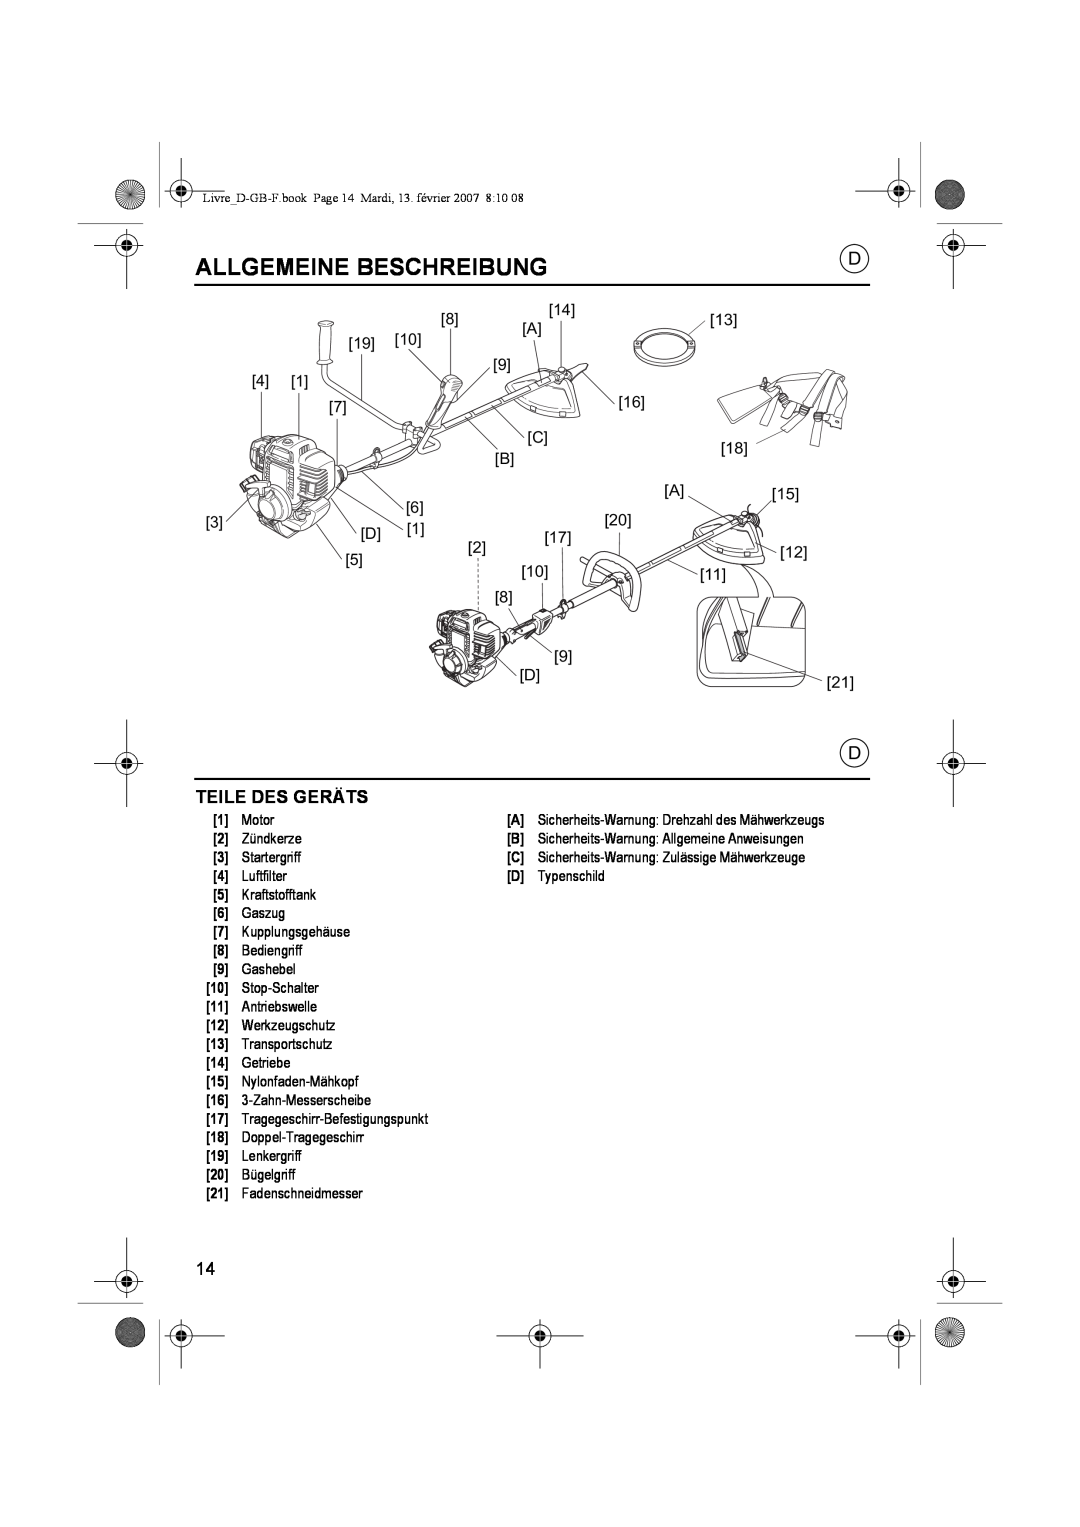 Honda Power Equipment UMK435E owner manual Allgemeine Beschreibung, Teile Des Geräts 